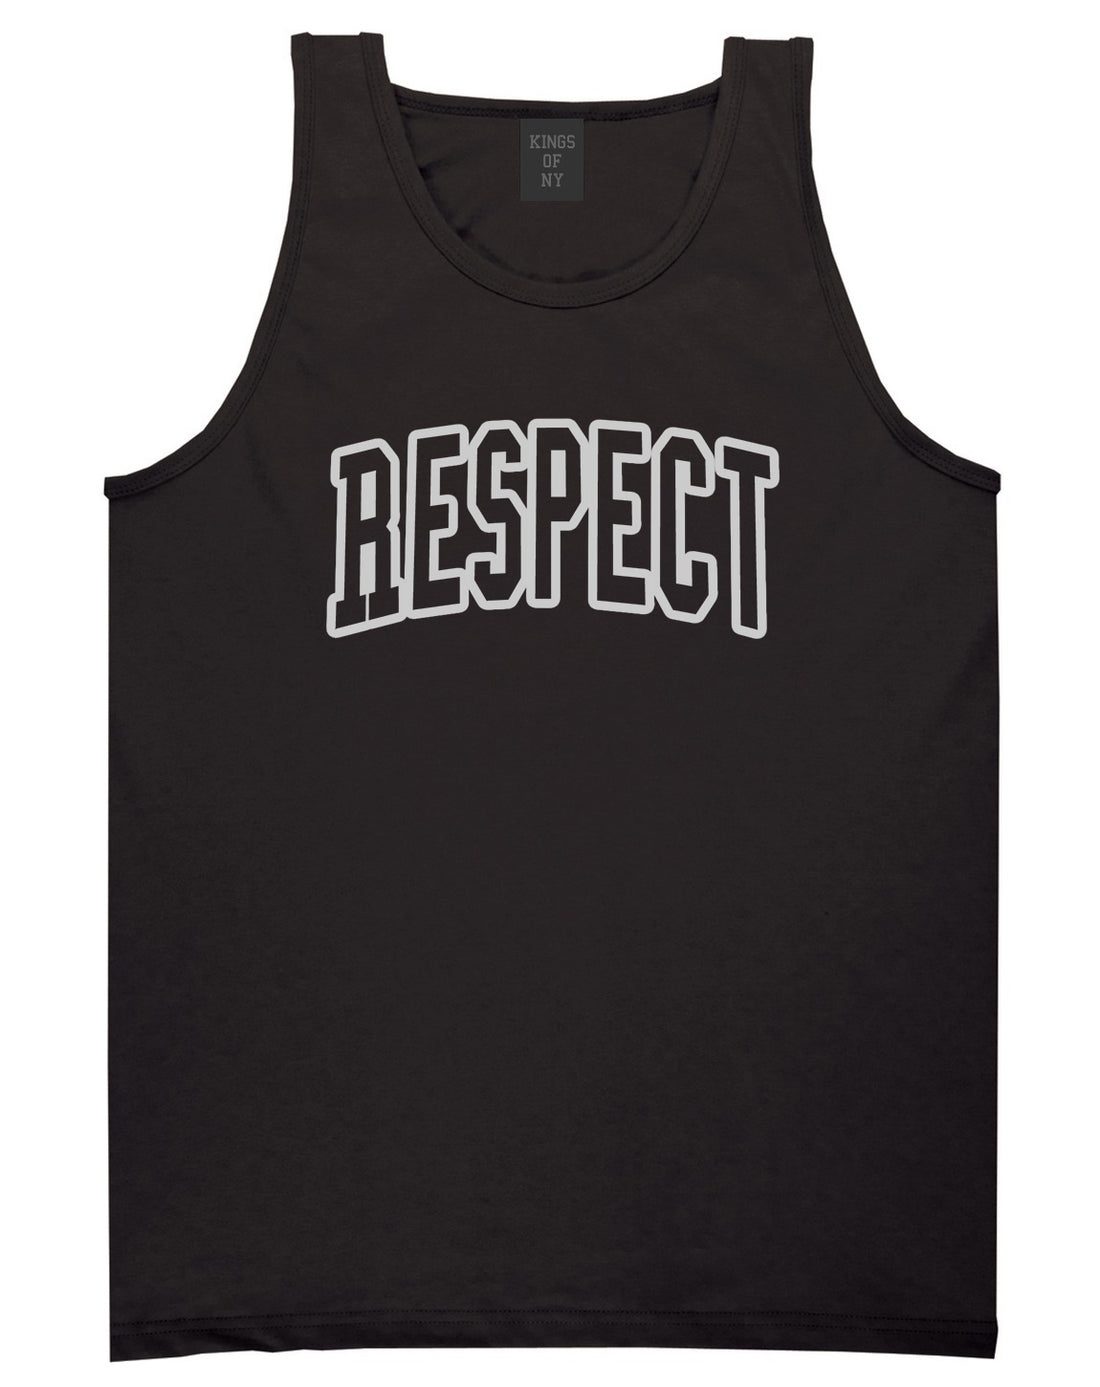 Respect Outline Mens Tank Top T-Shirt Black